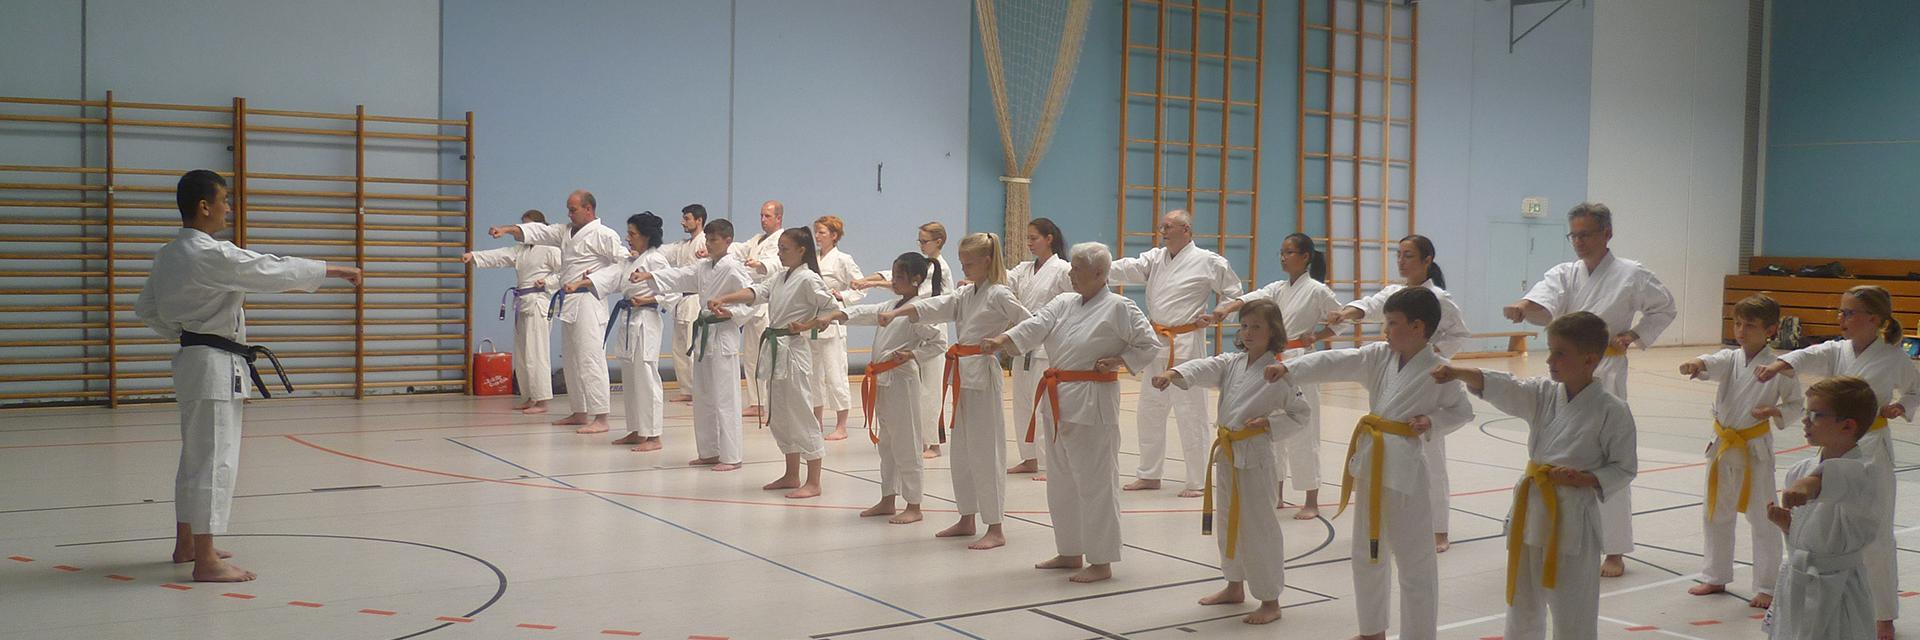 Lehrgang im Karate Koblenz Dojo